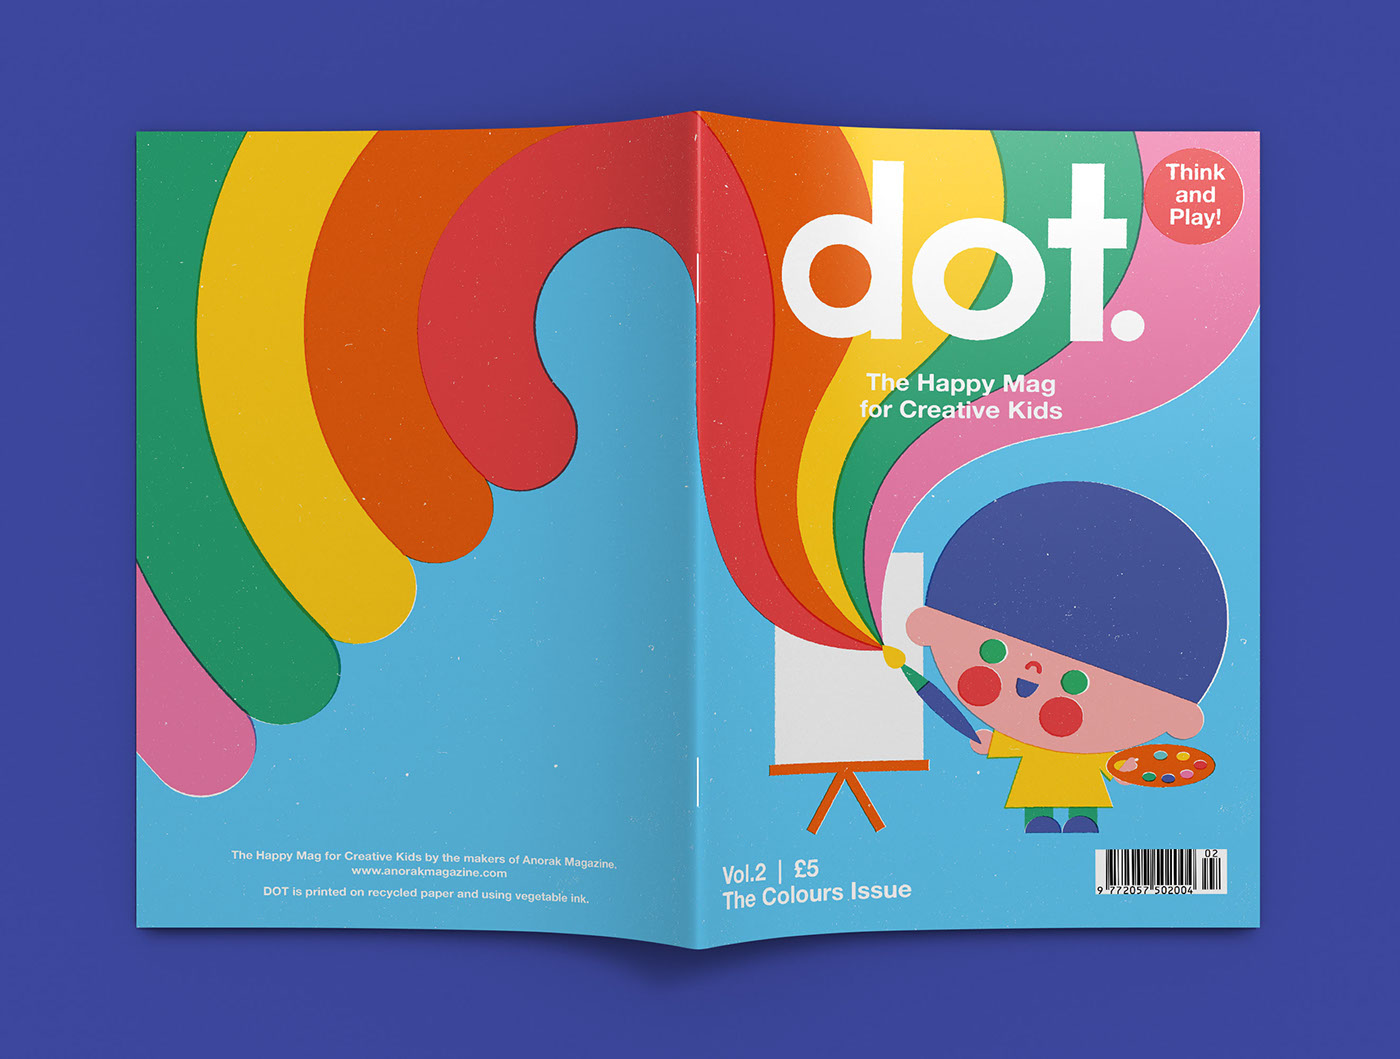 dot anorak magazine cute pre-school Fun learning